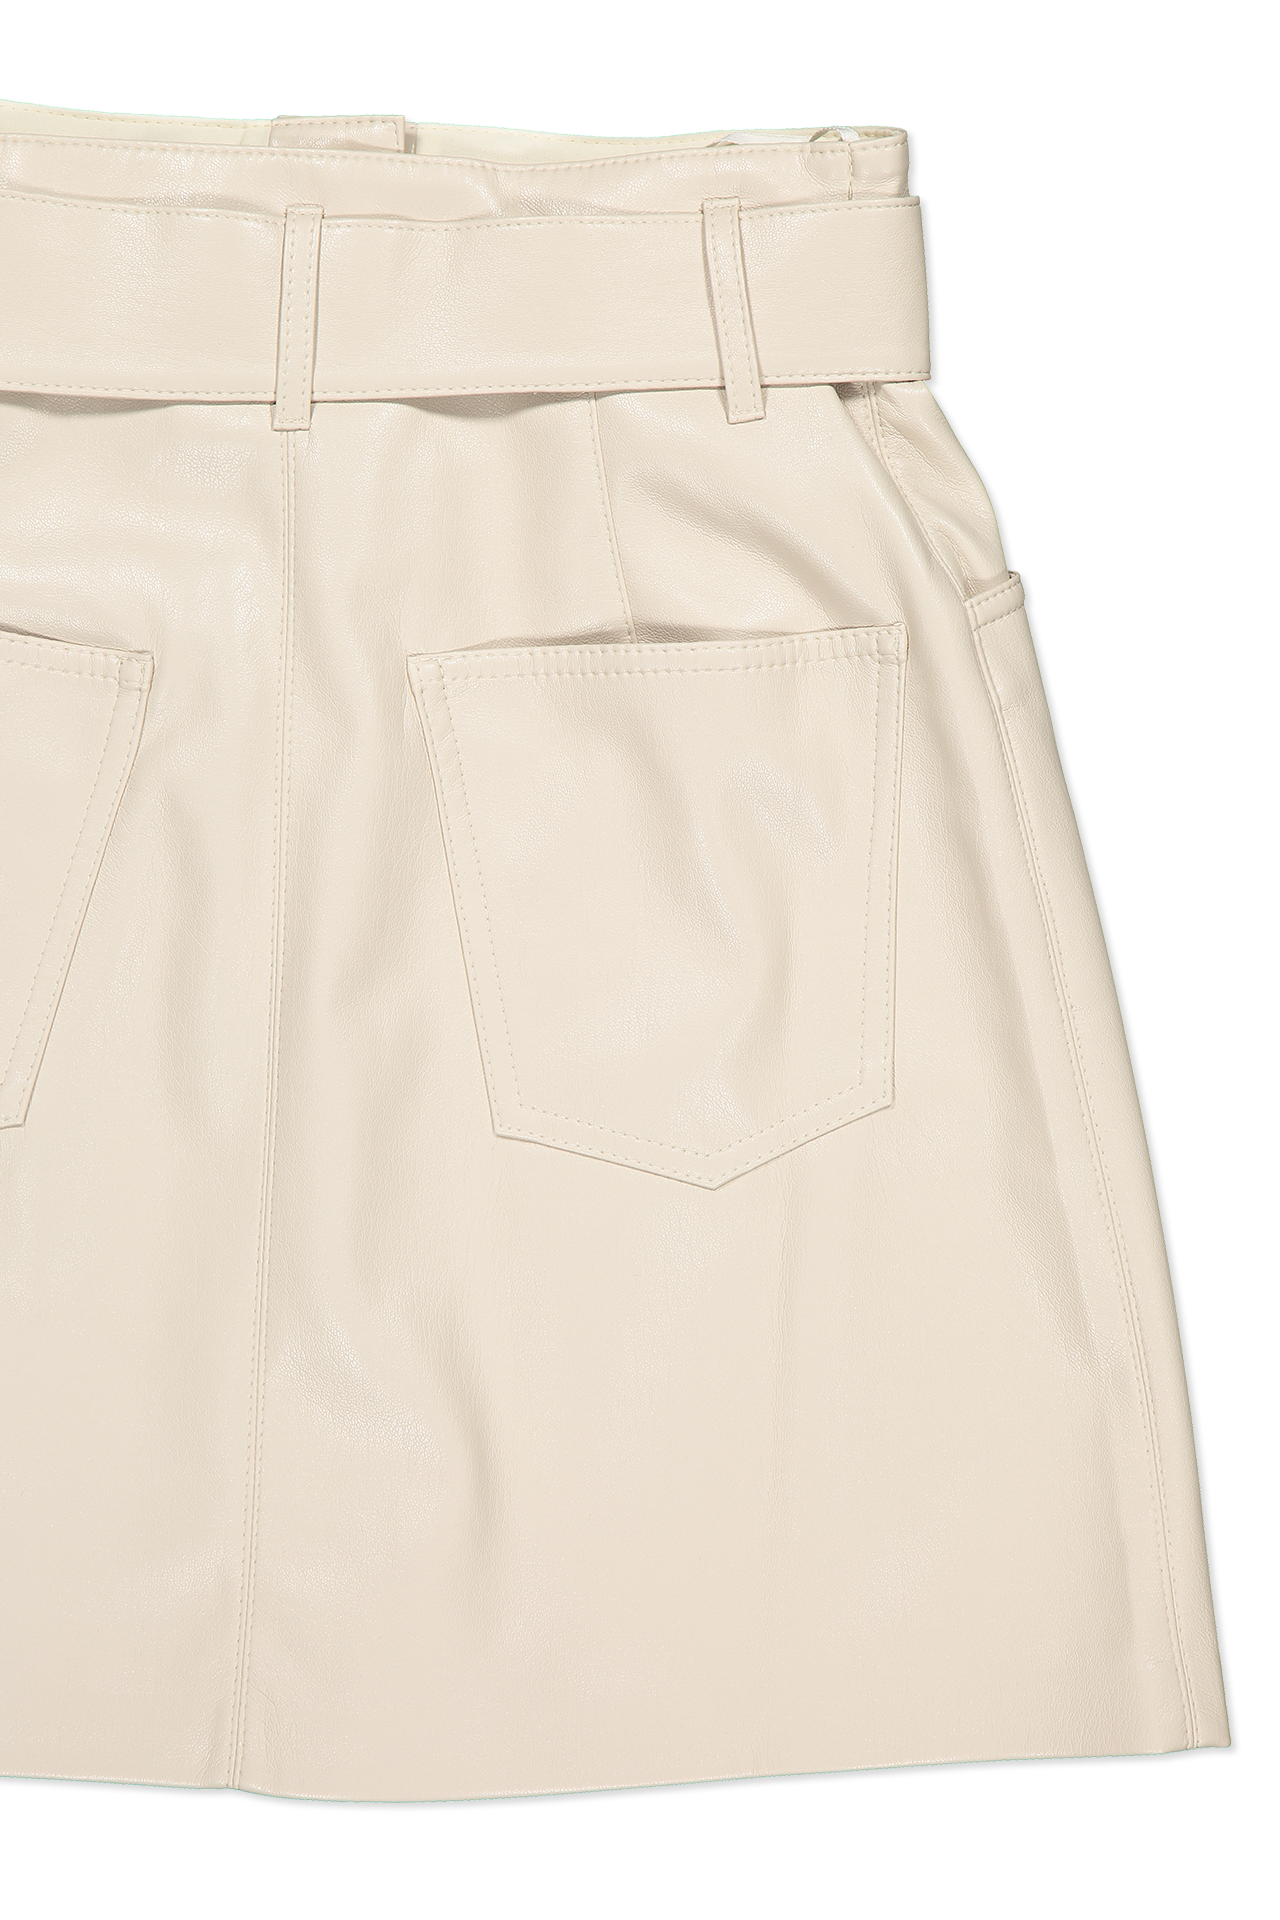 Nanushka Meda Skirt Creme Back Pocket Detail Image (6595768647795)